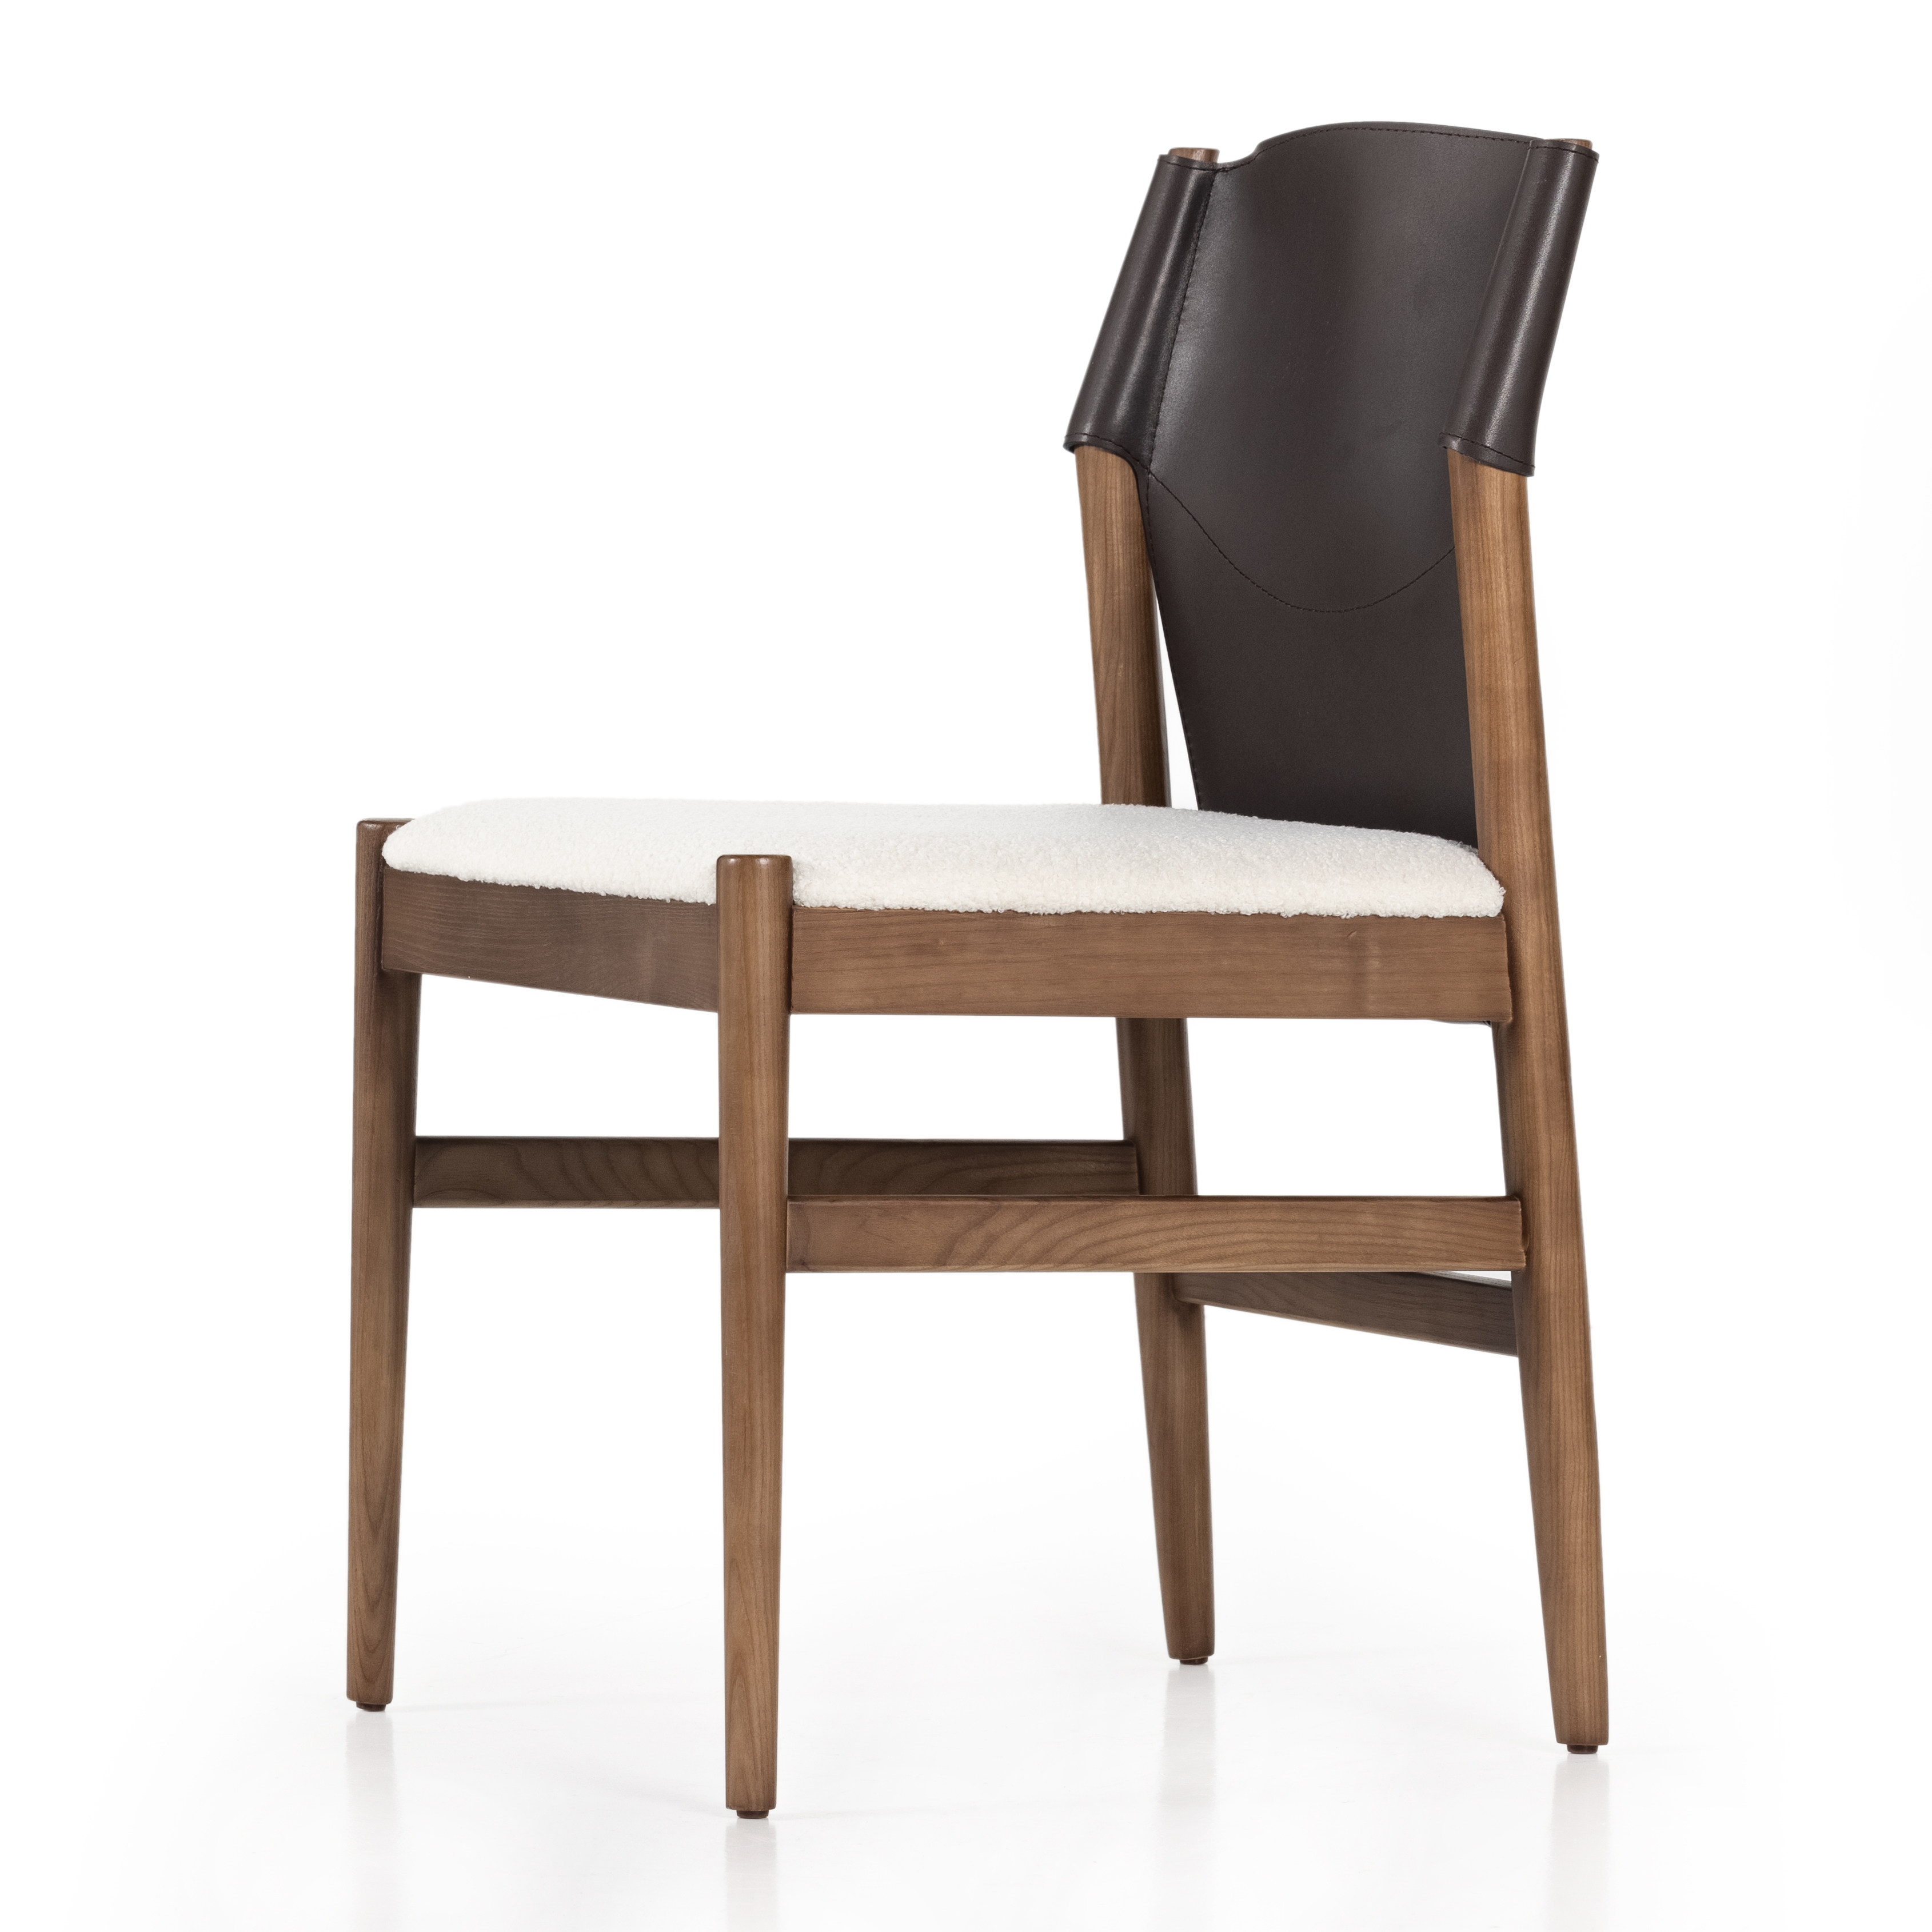 Lulu Armless Dining Chair-Espresso Lthr - Image 3